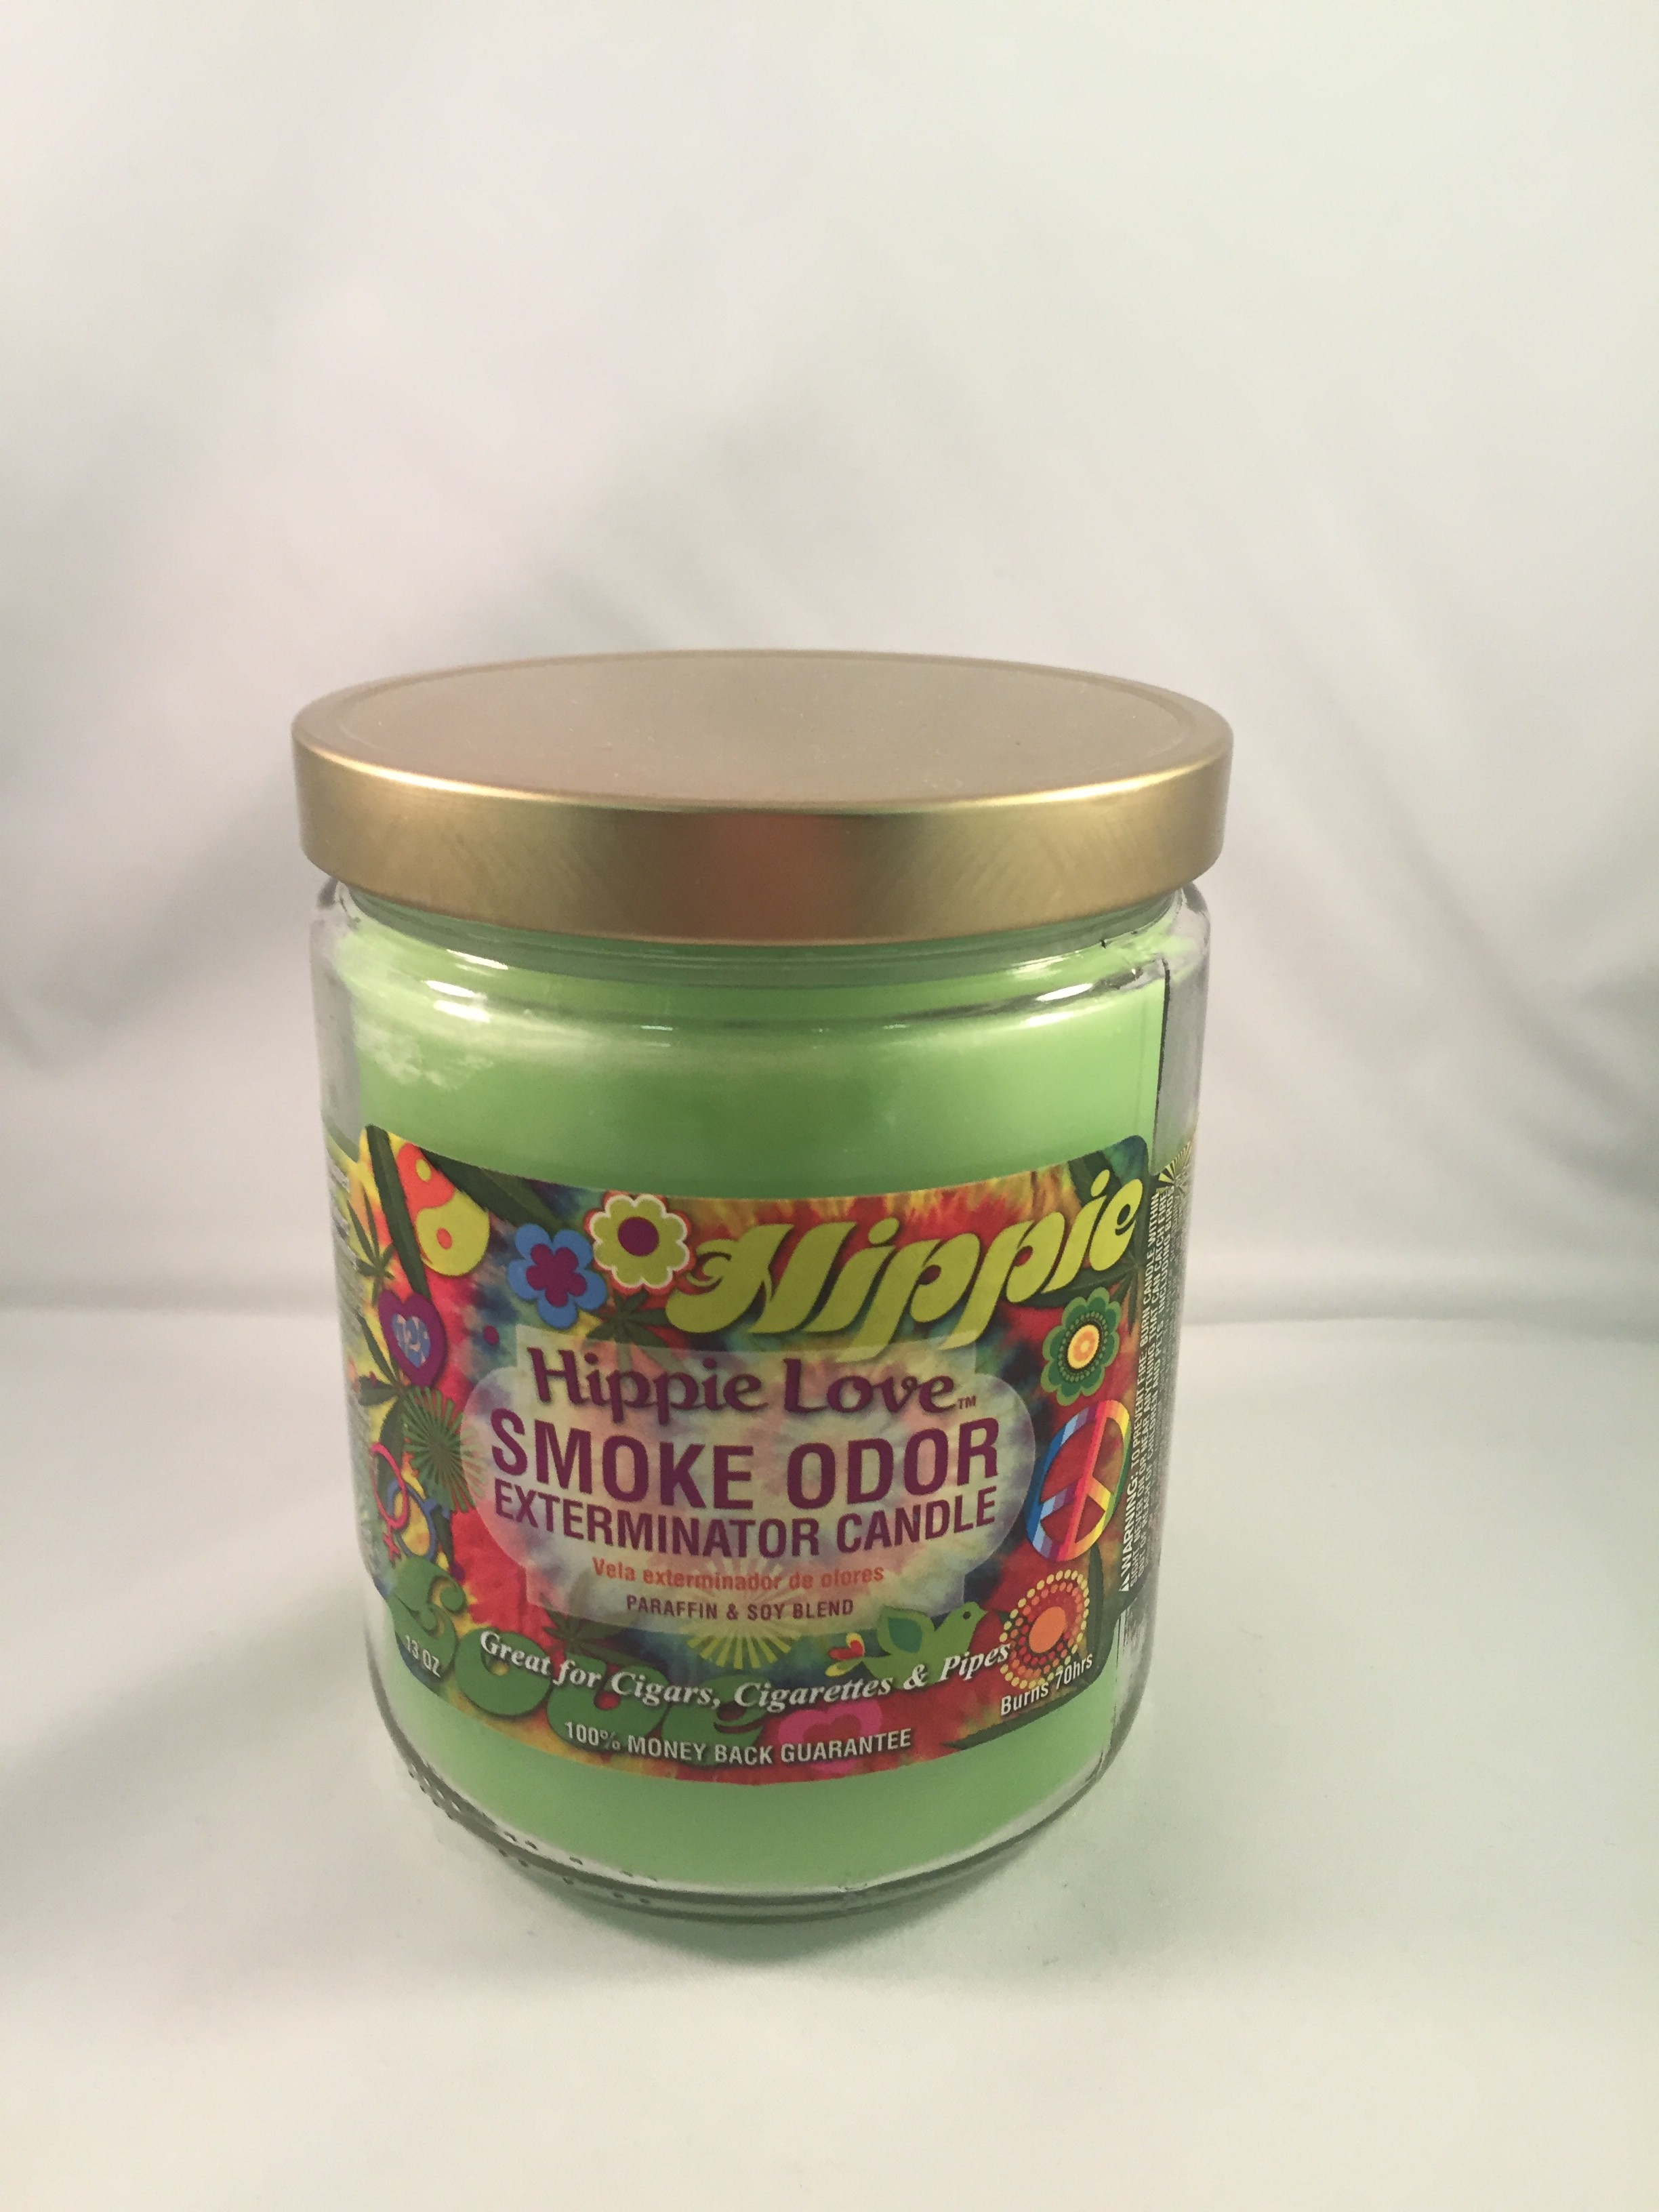 Smoke Odor Exterminator Candle - Hippie Love